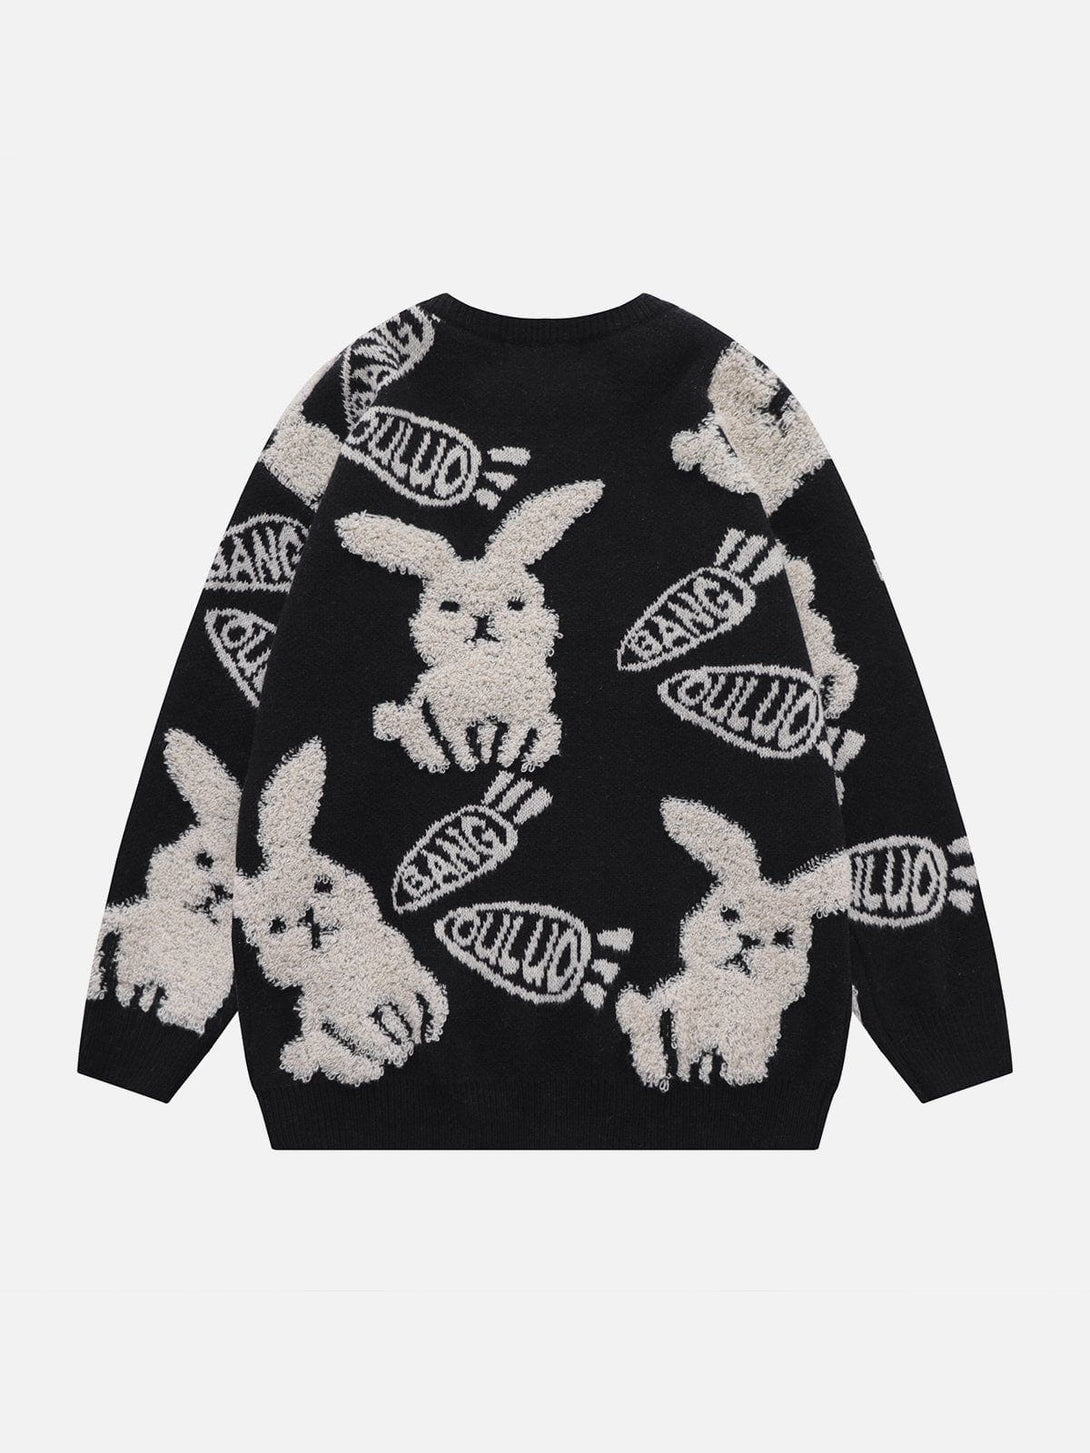 Levefly - Flocking Rabbit Knit Sweater - Streetwear Fashion - levefly.com